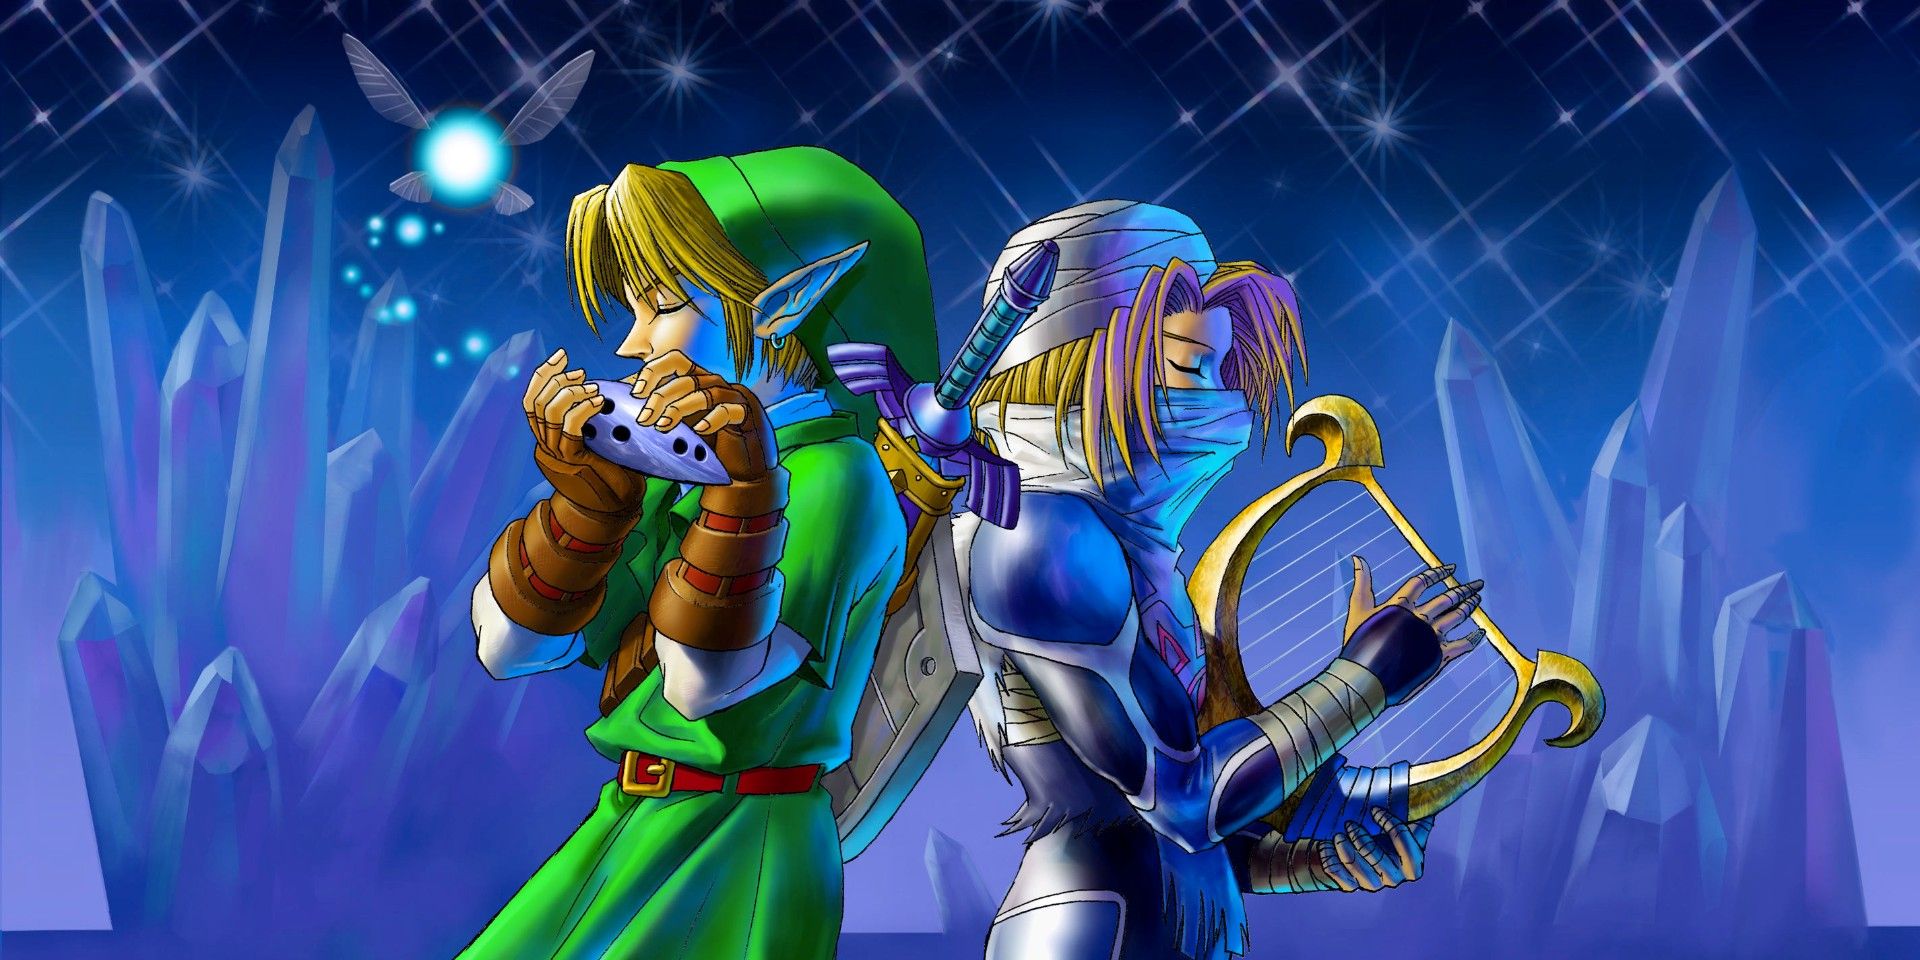 1998 Legend of Zelda: Ocarina of Time Target Exclusive Action